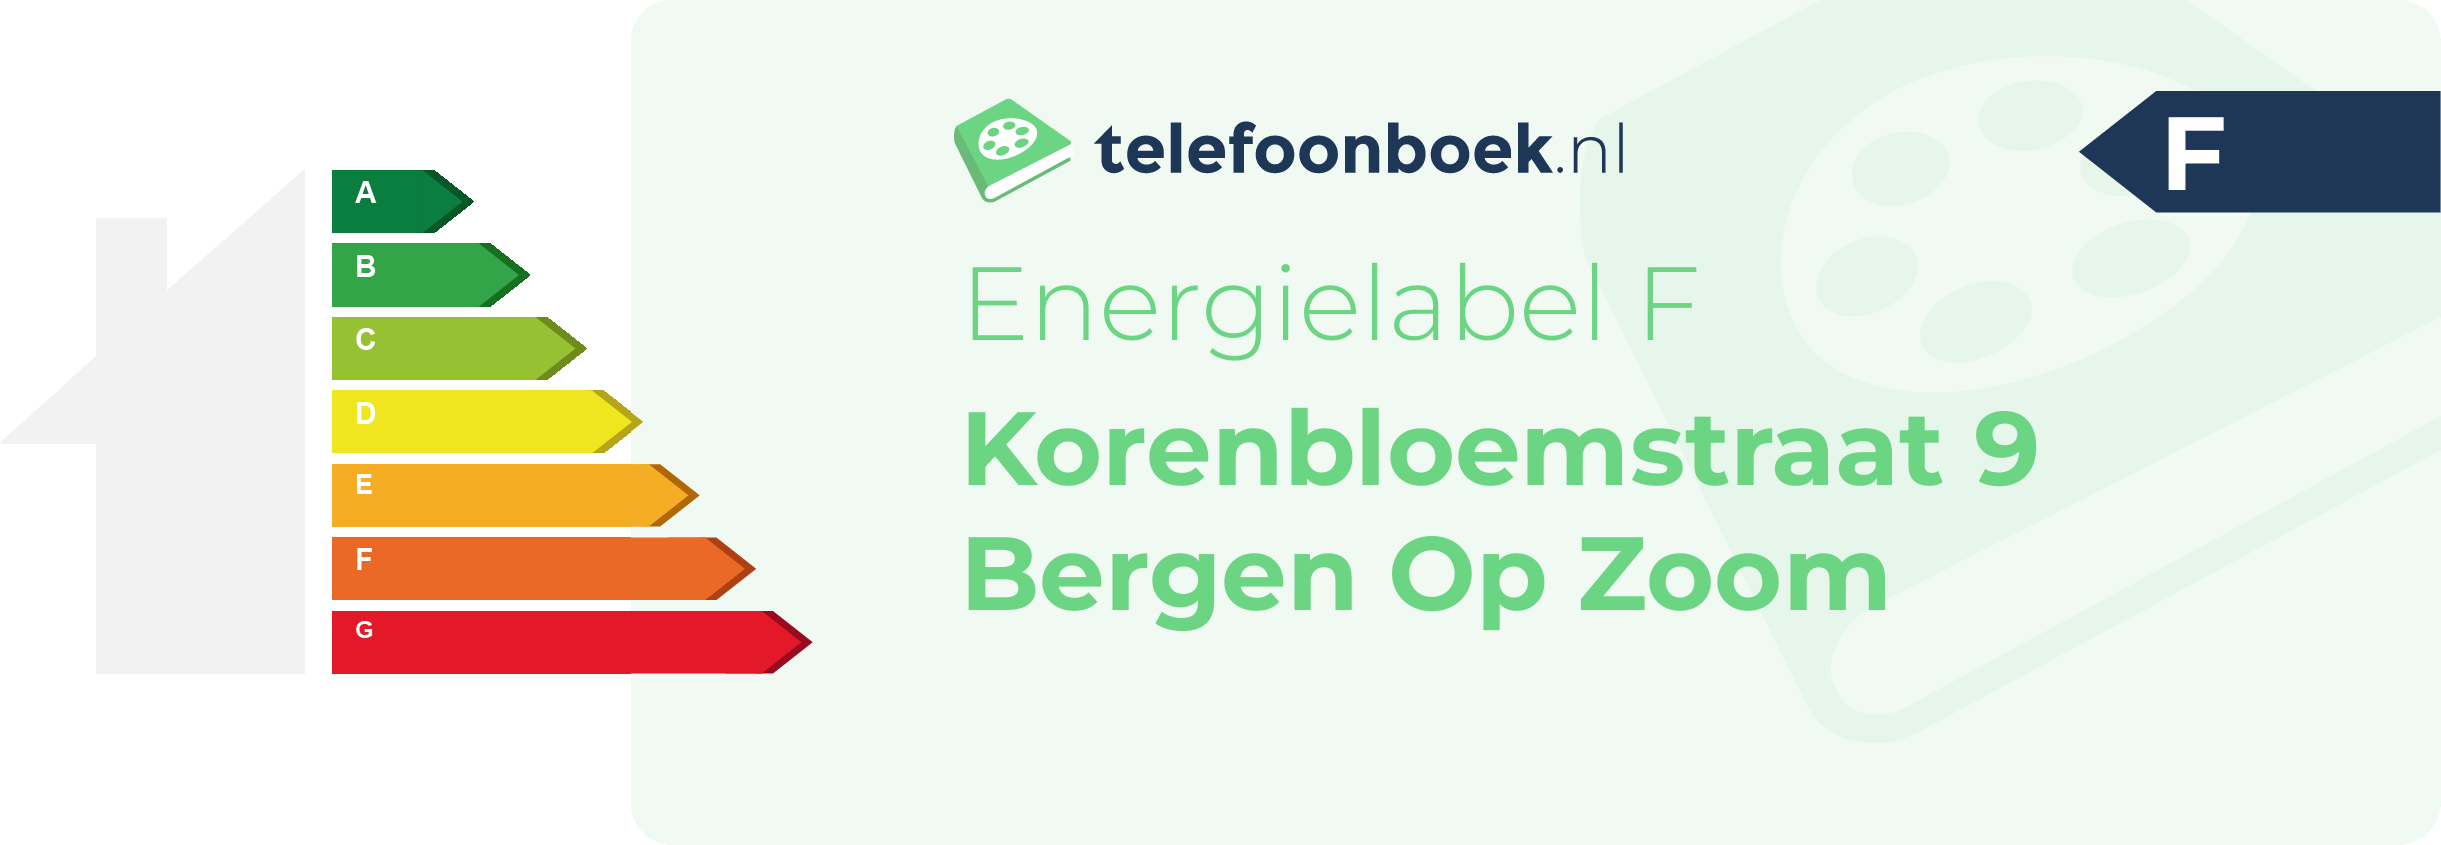 Energielabel Korenbloemstraat 9 Bergen Op Zoom